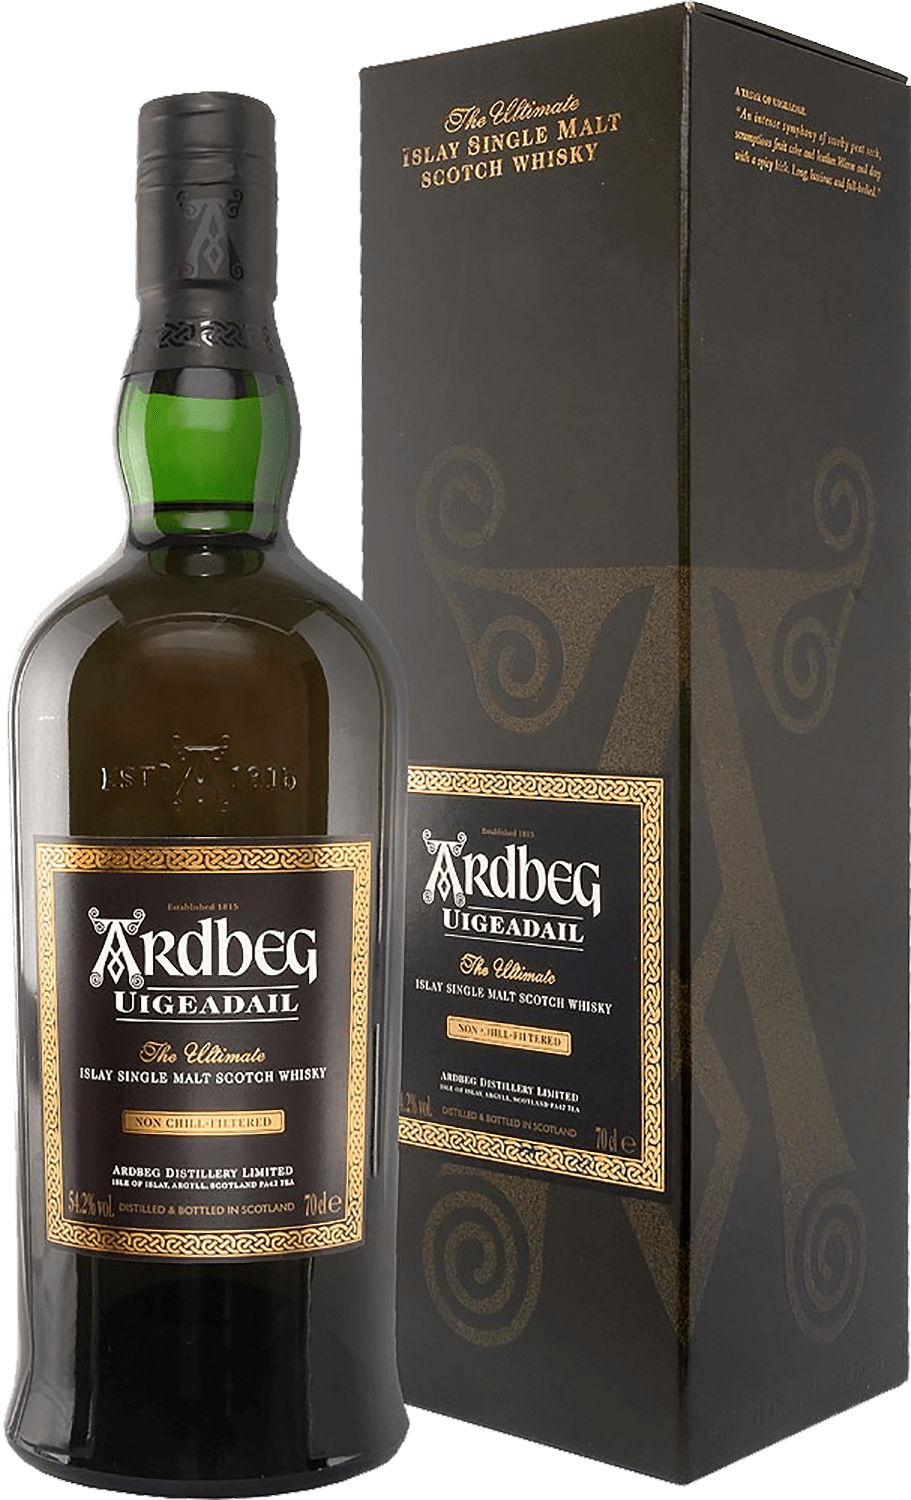 hinch peated single malt irish whisky Ardbeg Uigeadail Single Malt Scotch Whisky